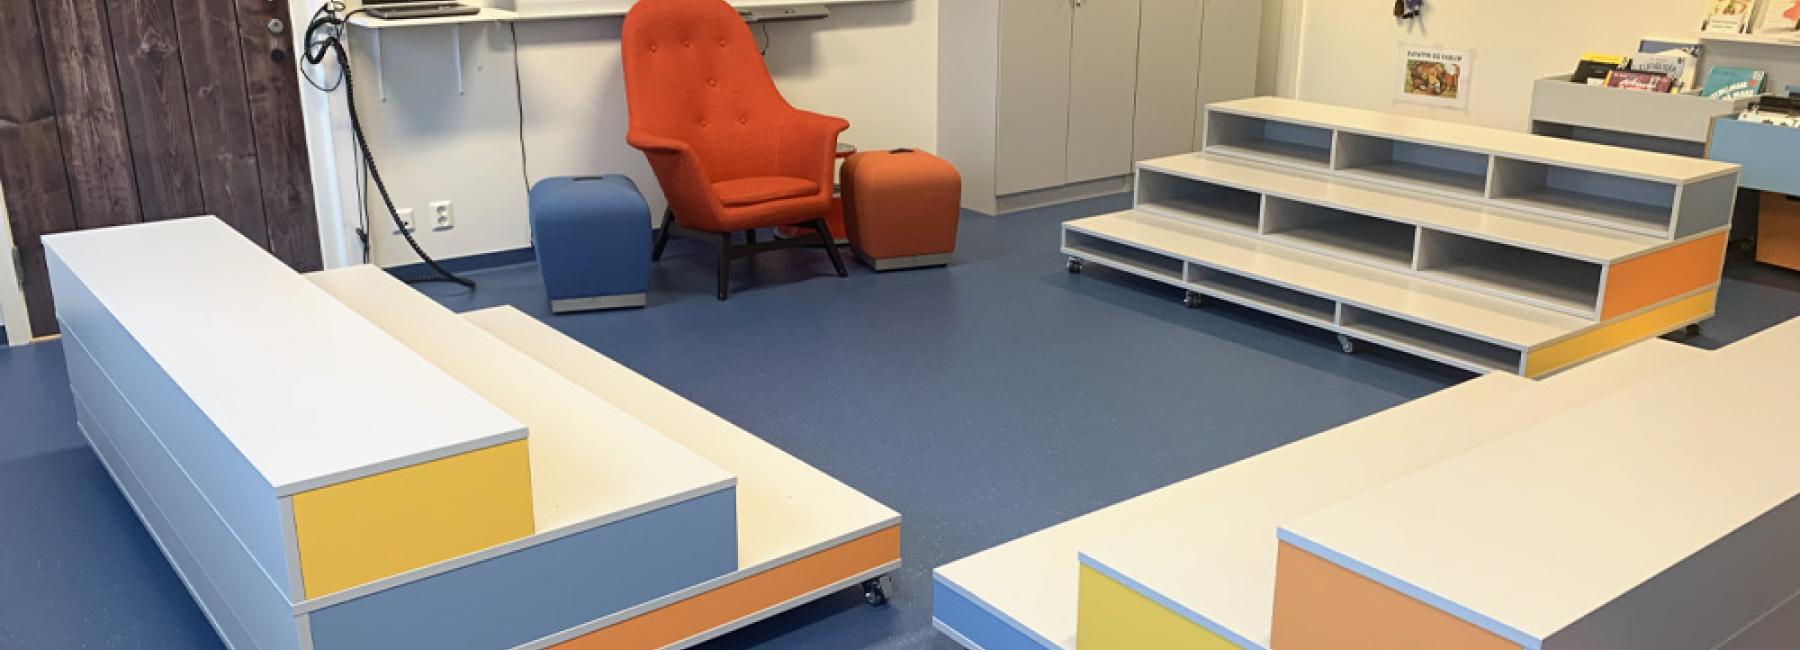 Klasserom på Lunde skole med fargerike møbler og et slitesterkt gulv ra gerflor